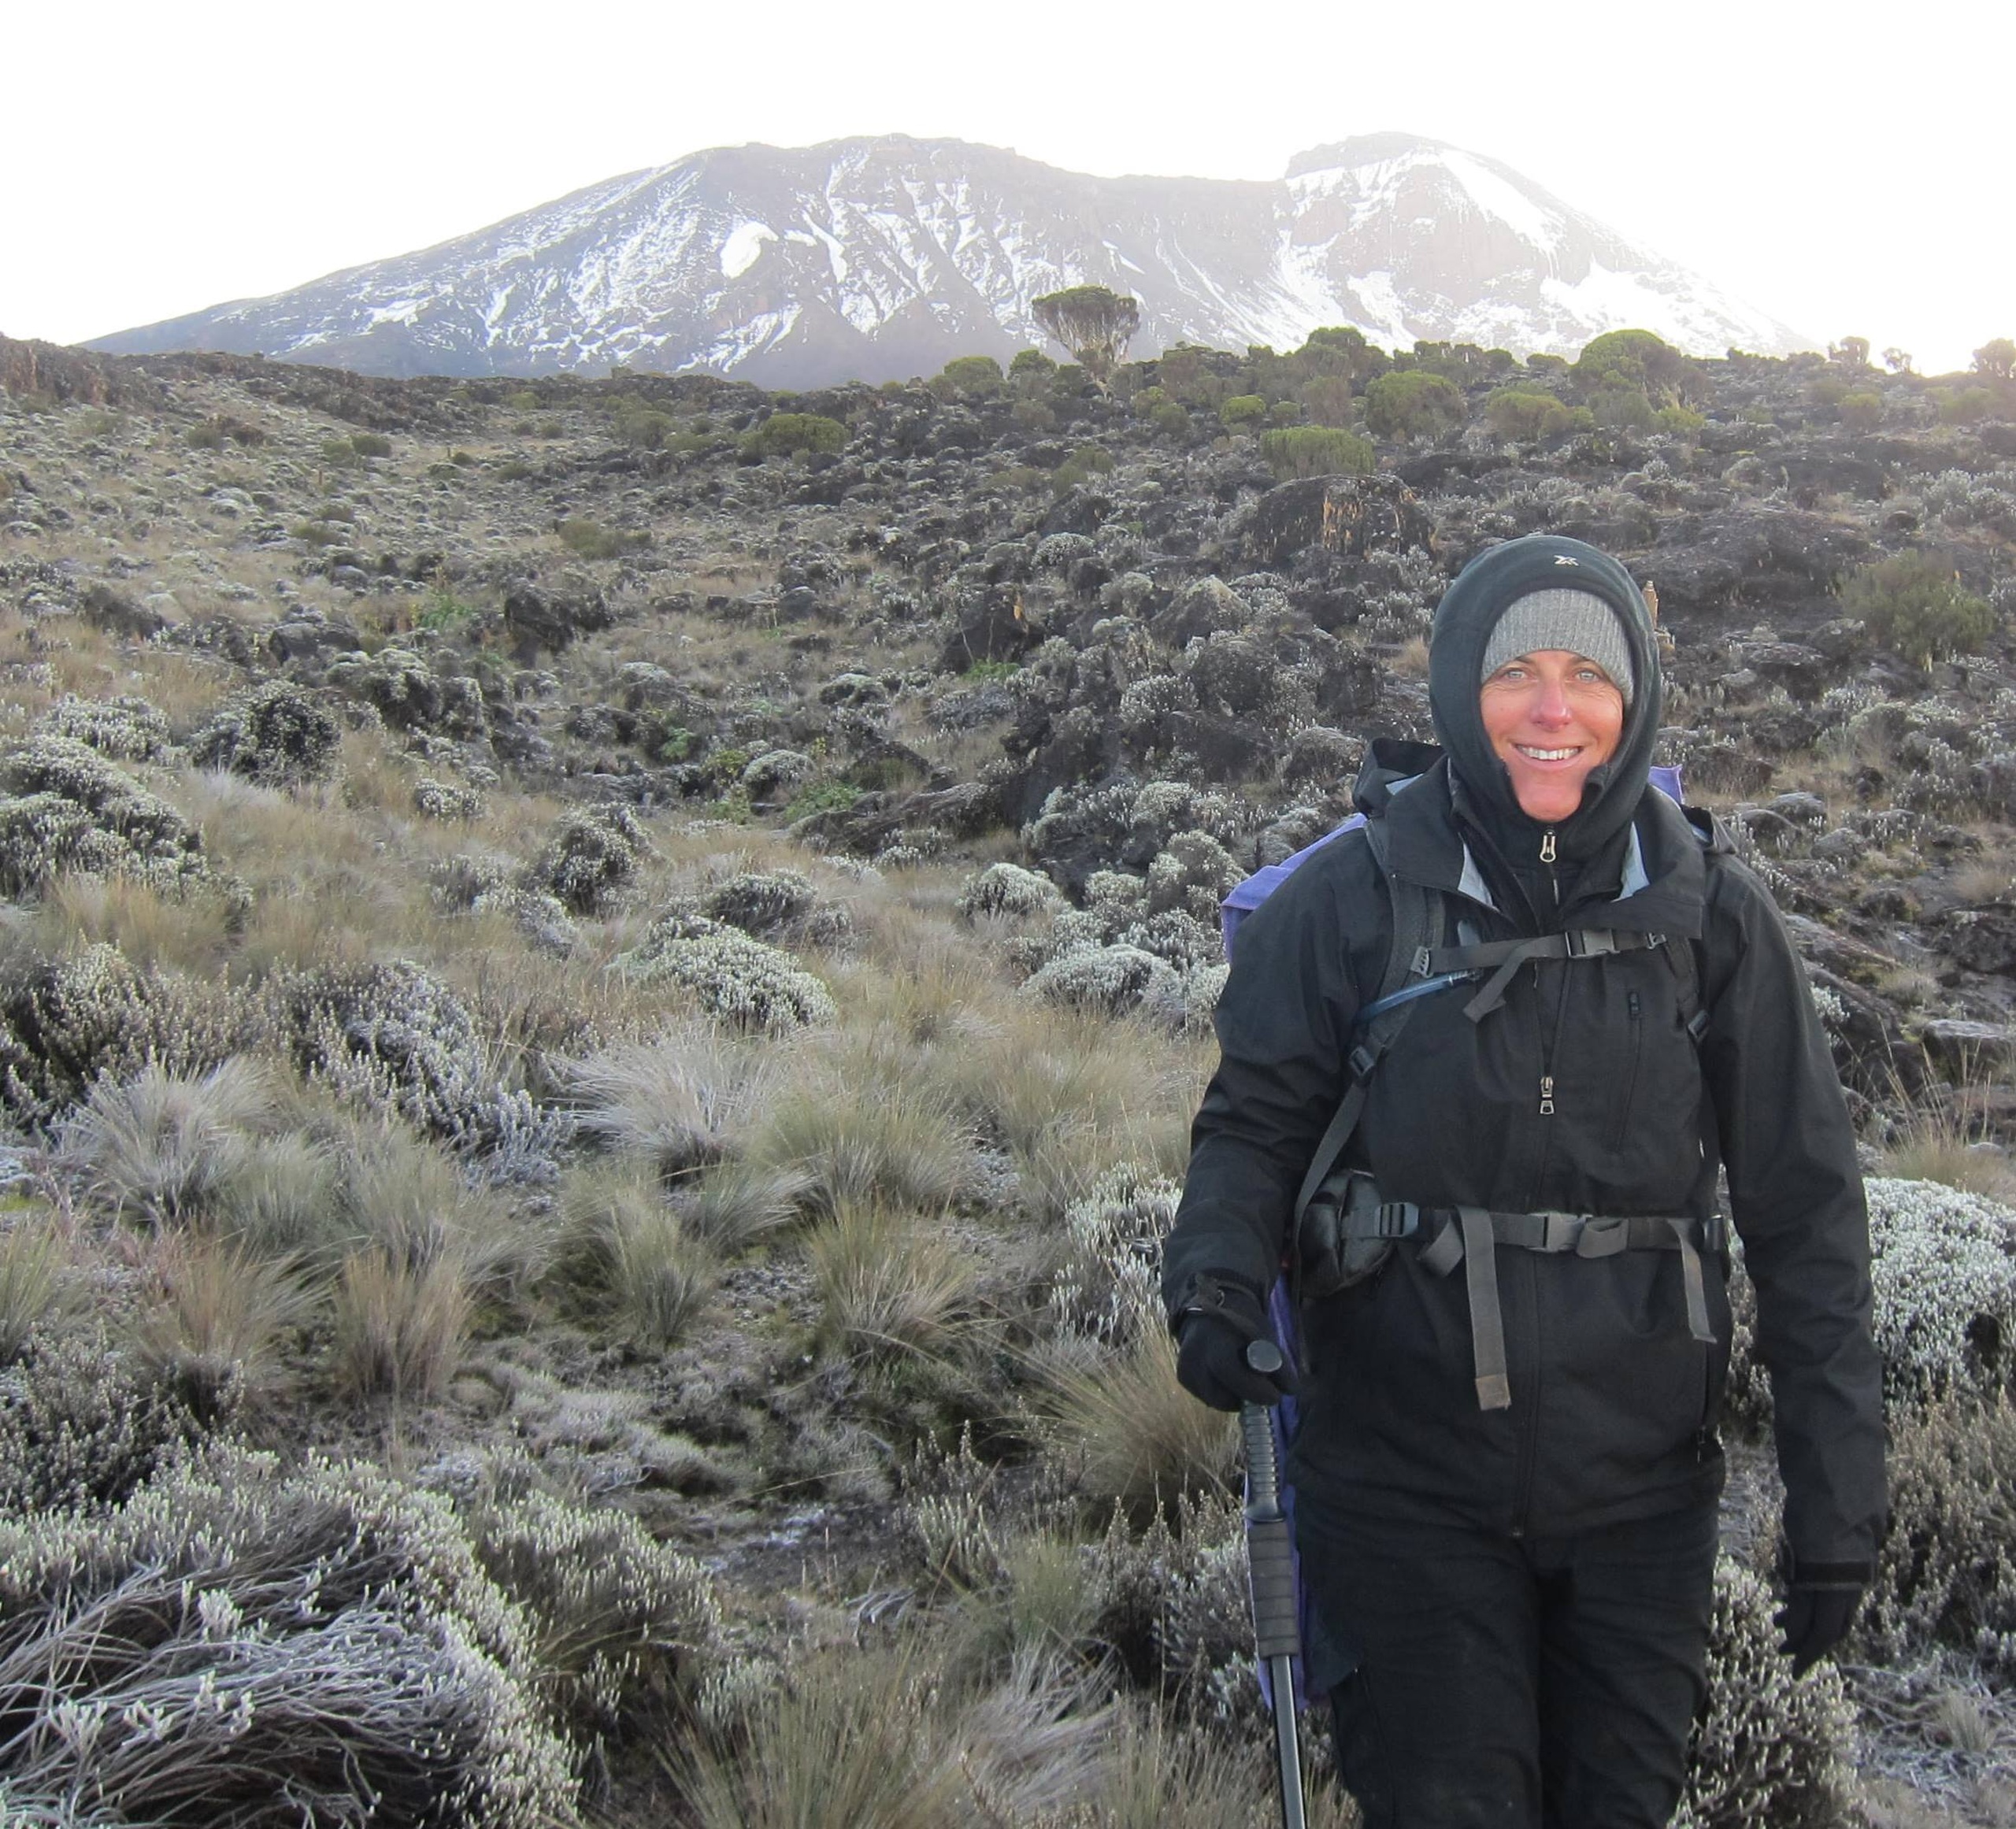 Romilly hiking Mt Kilimanjaro